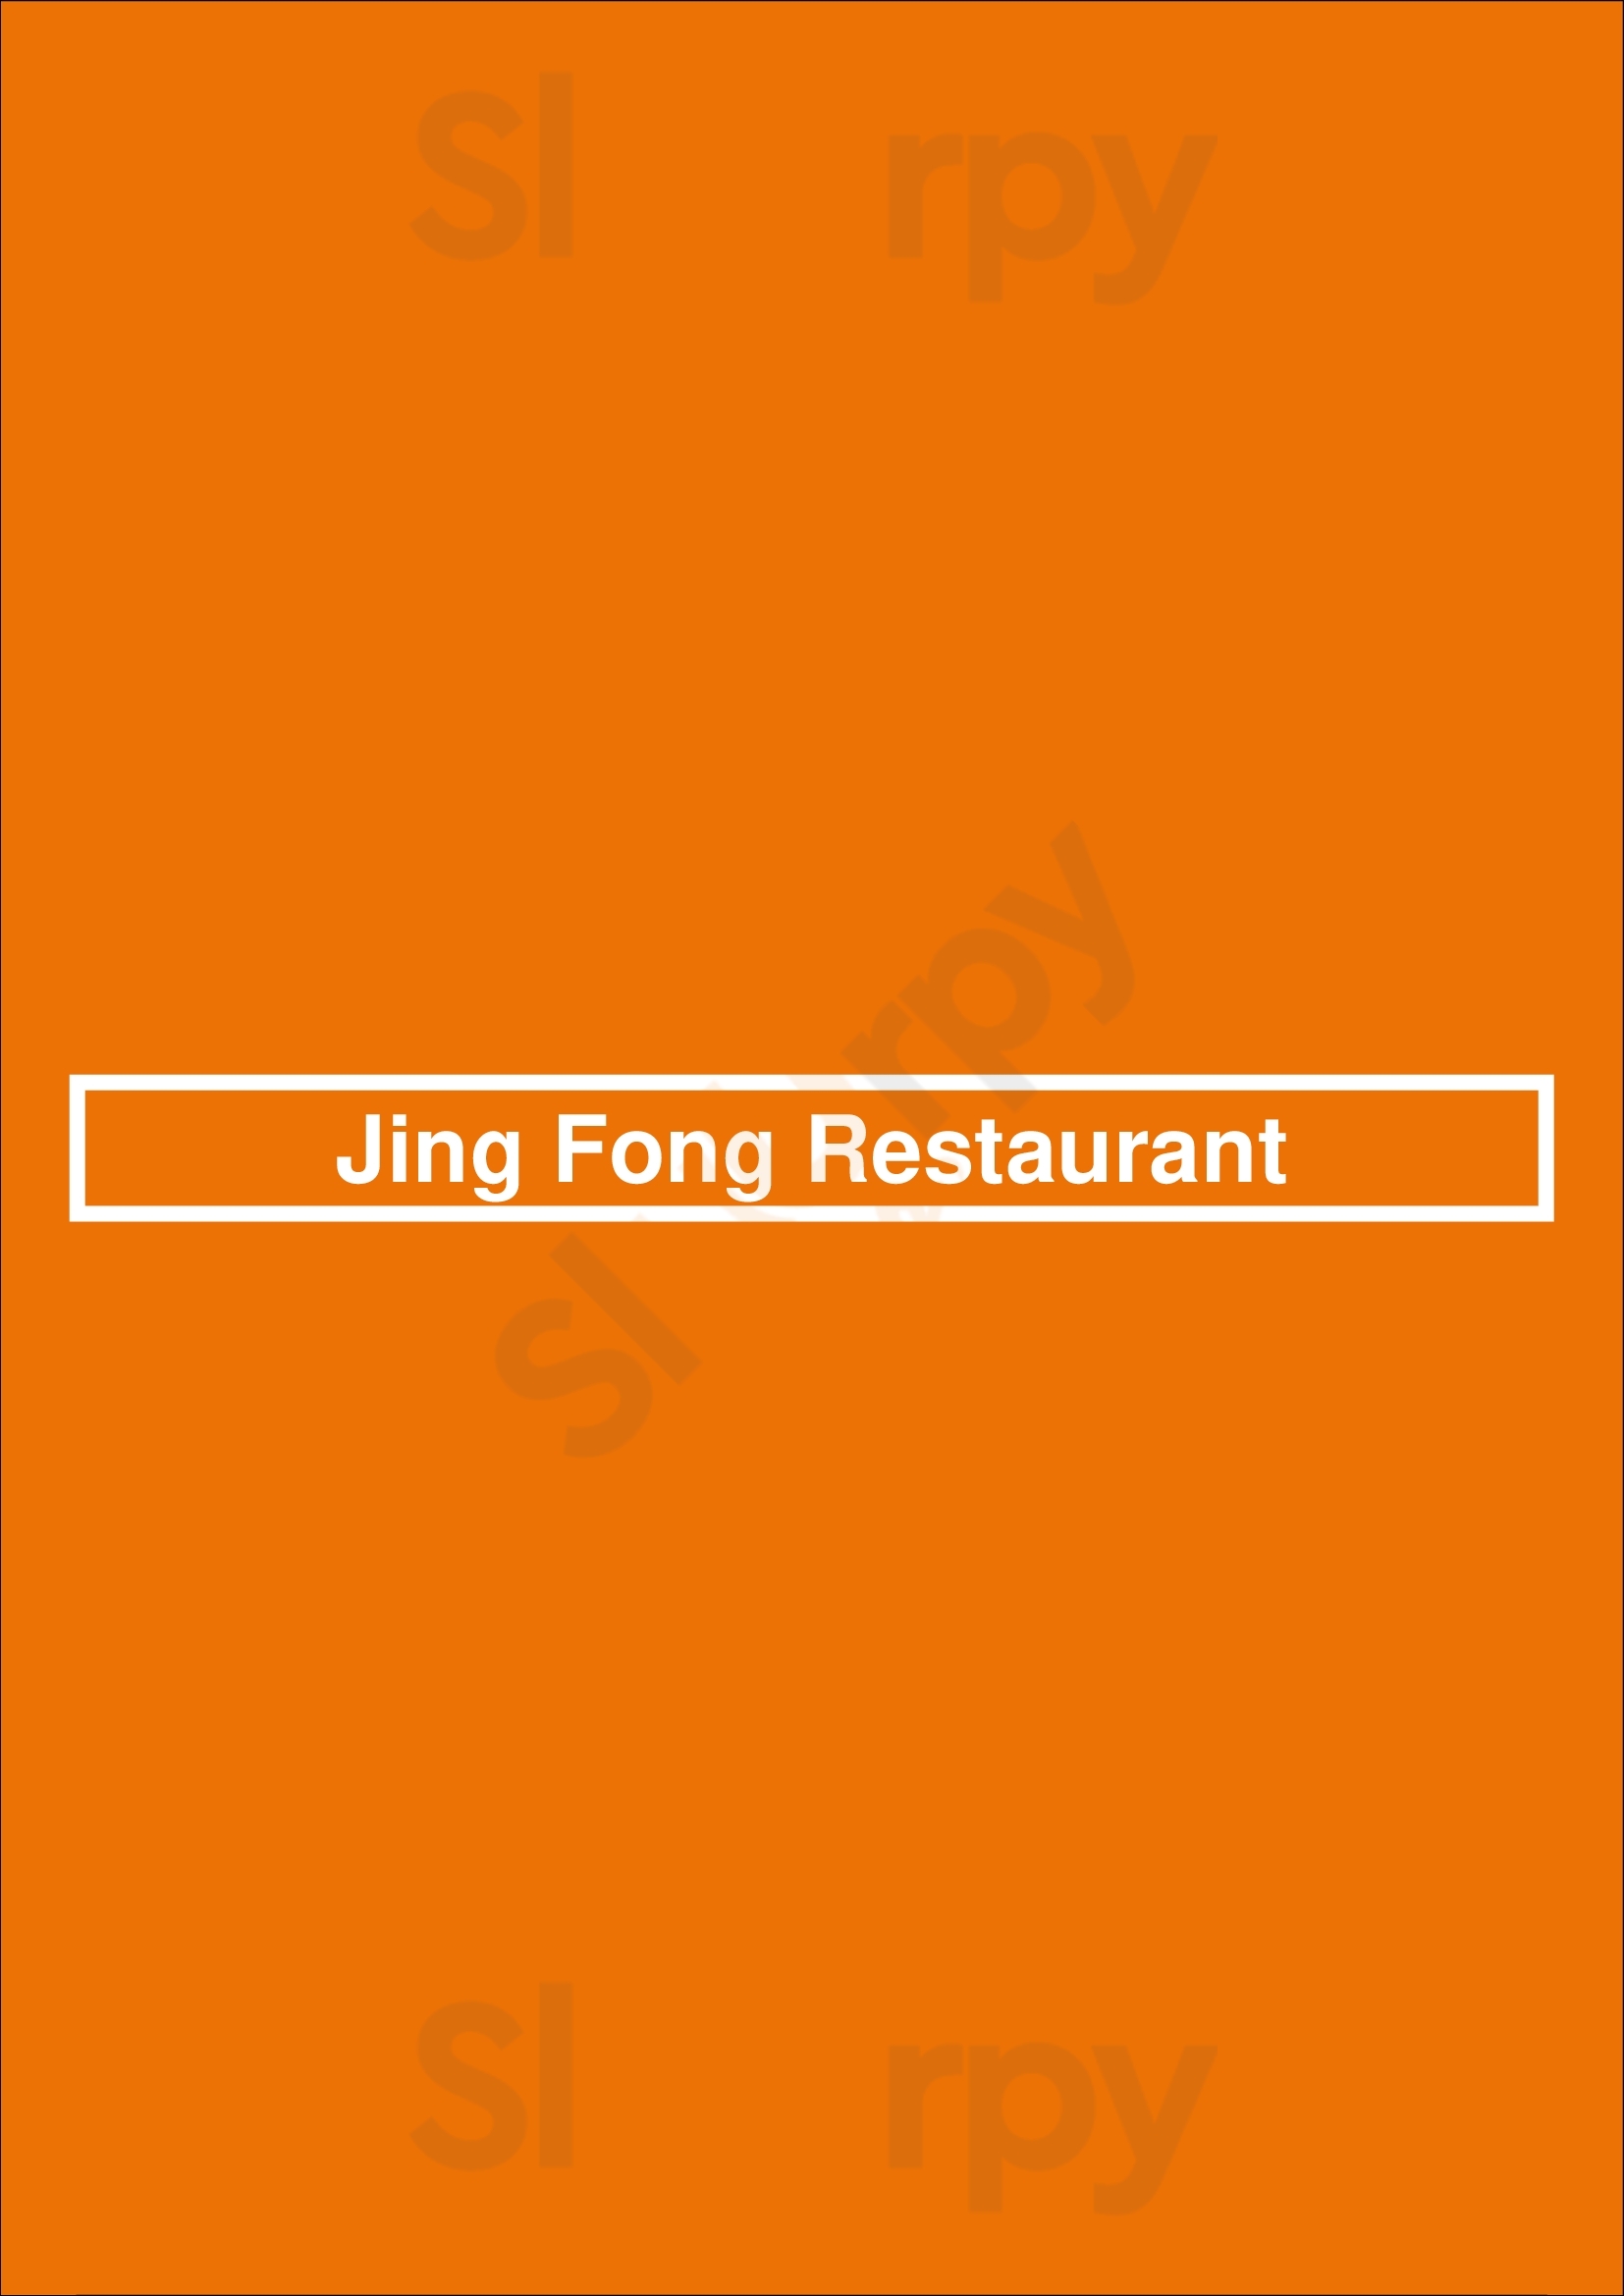 Jing Fong Restaurant New York City Menu - 1